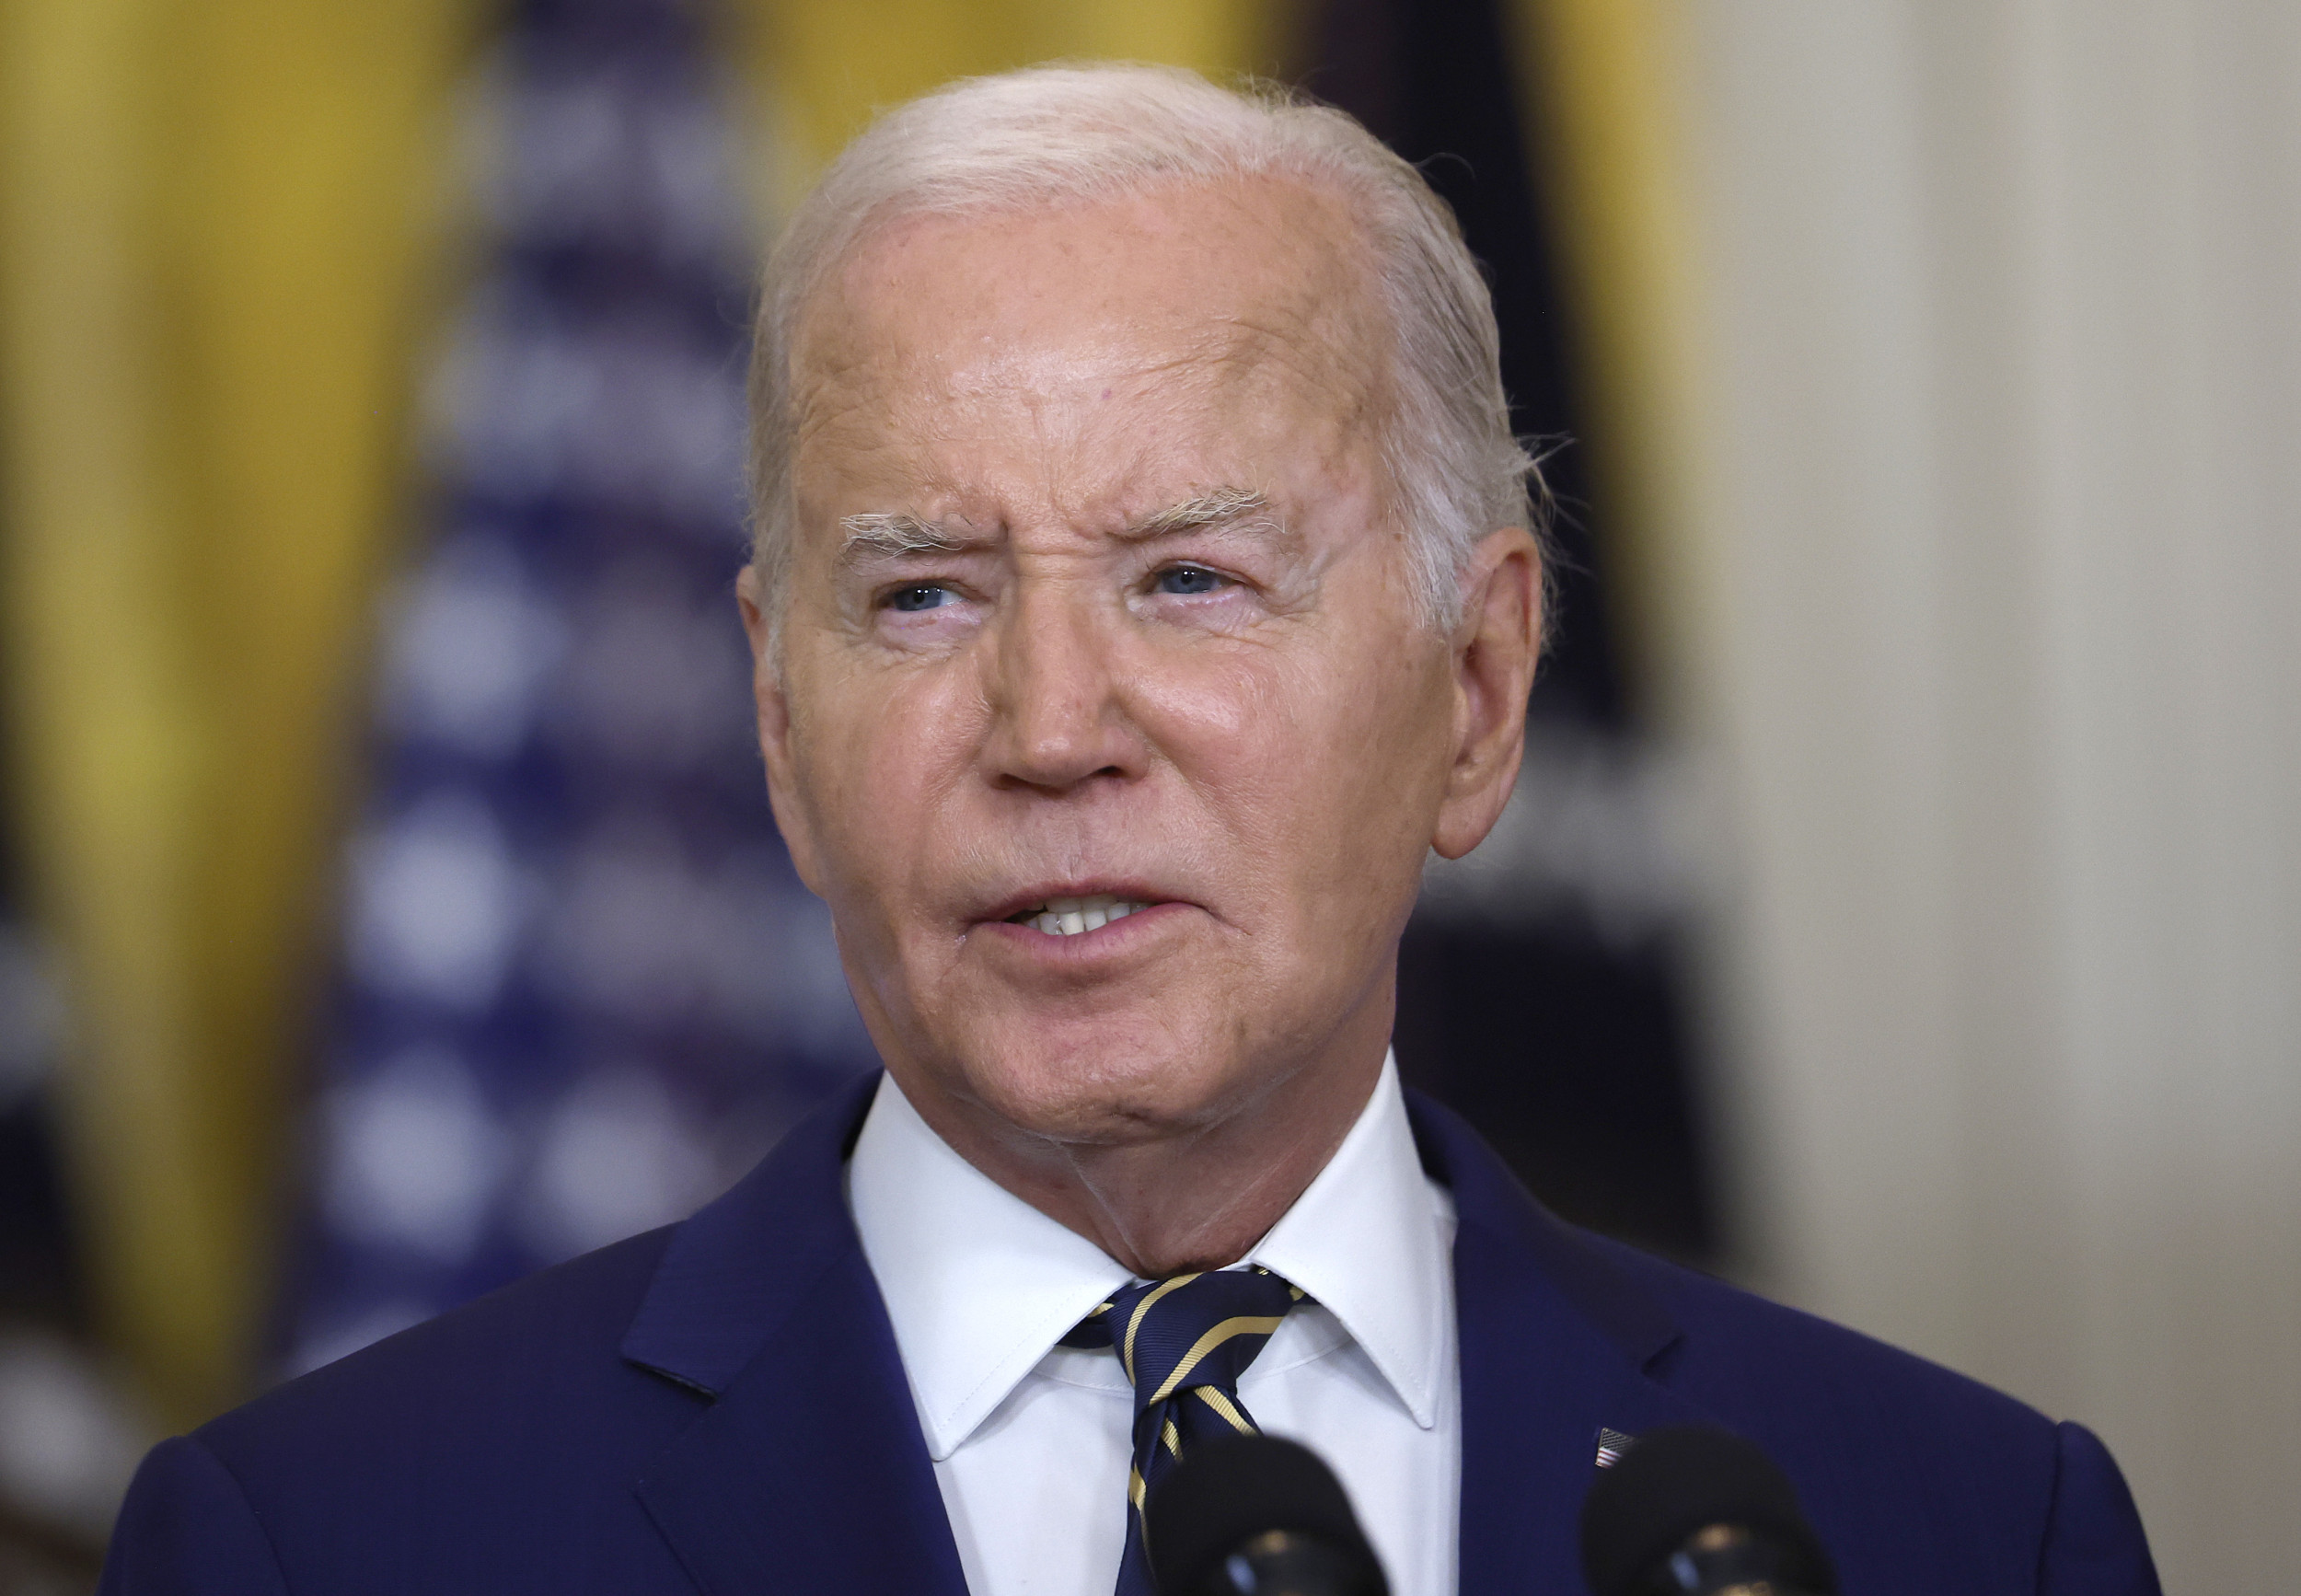 Joe Biden leads Donald Trump among top US pollsters